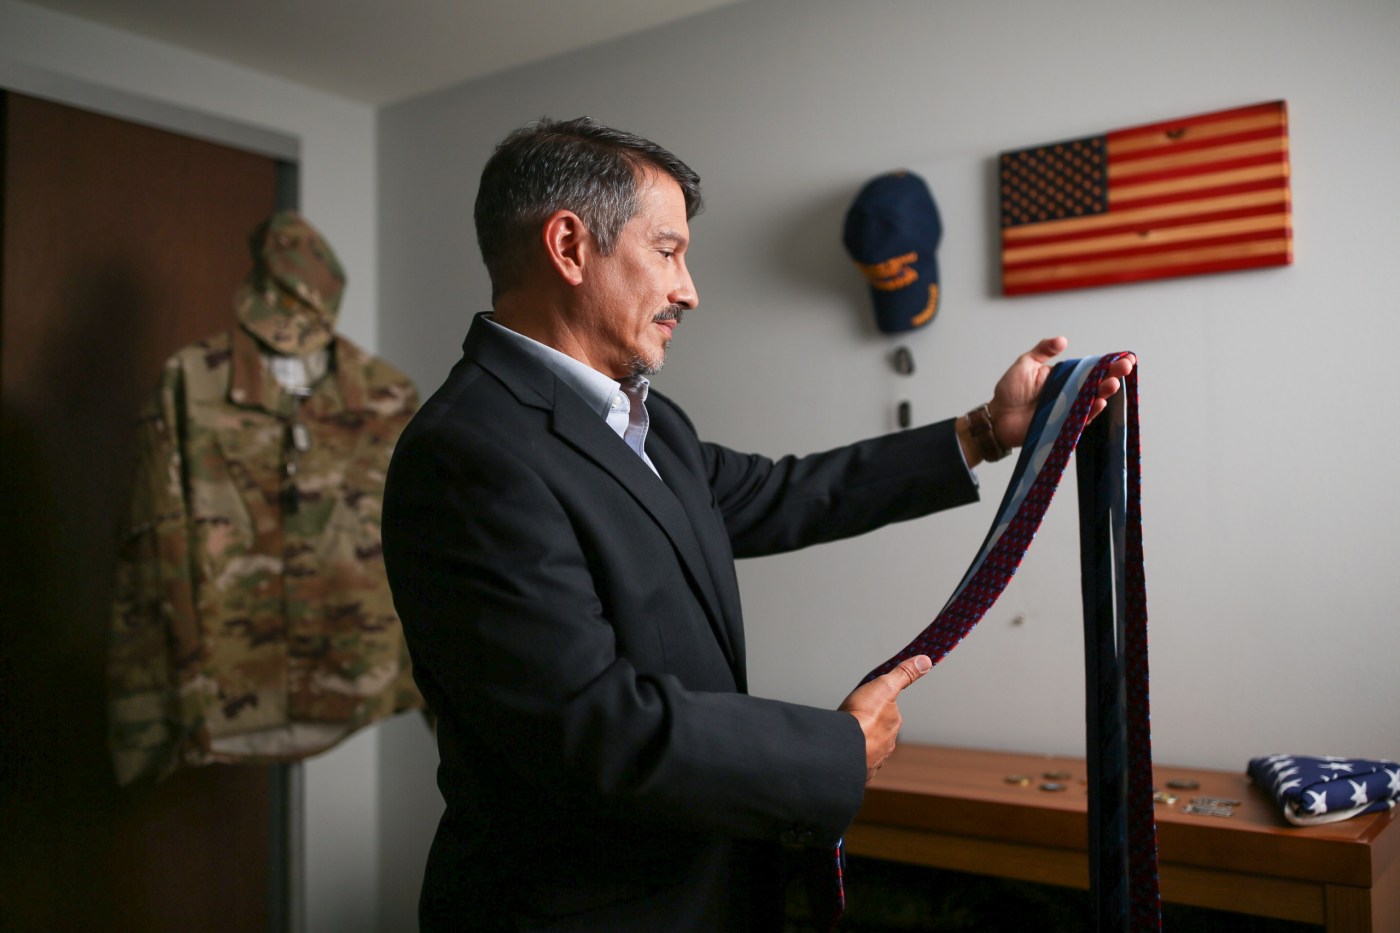 Free resources help Veterans find jobs